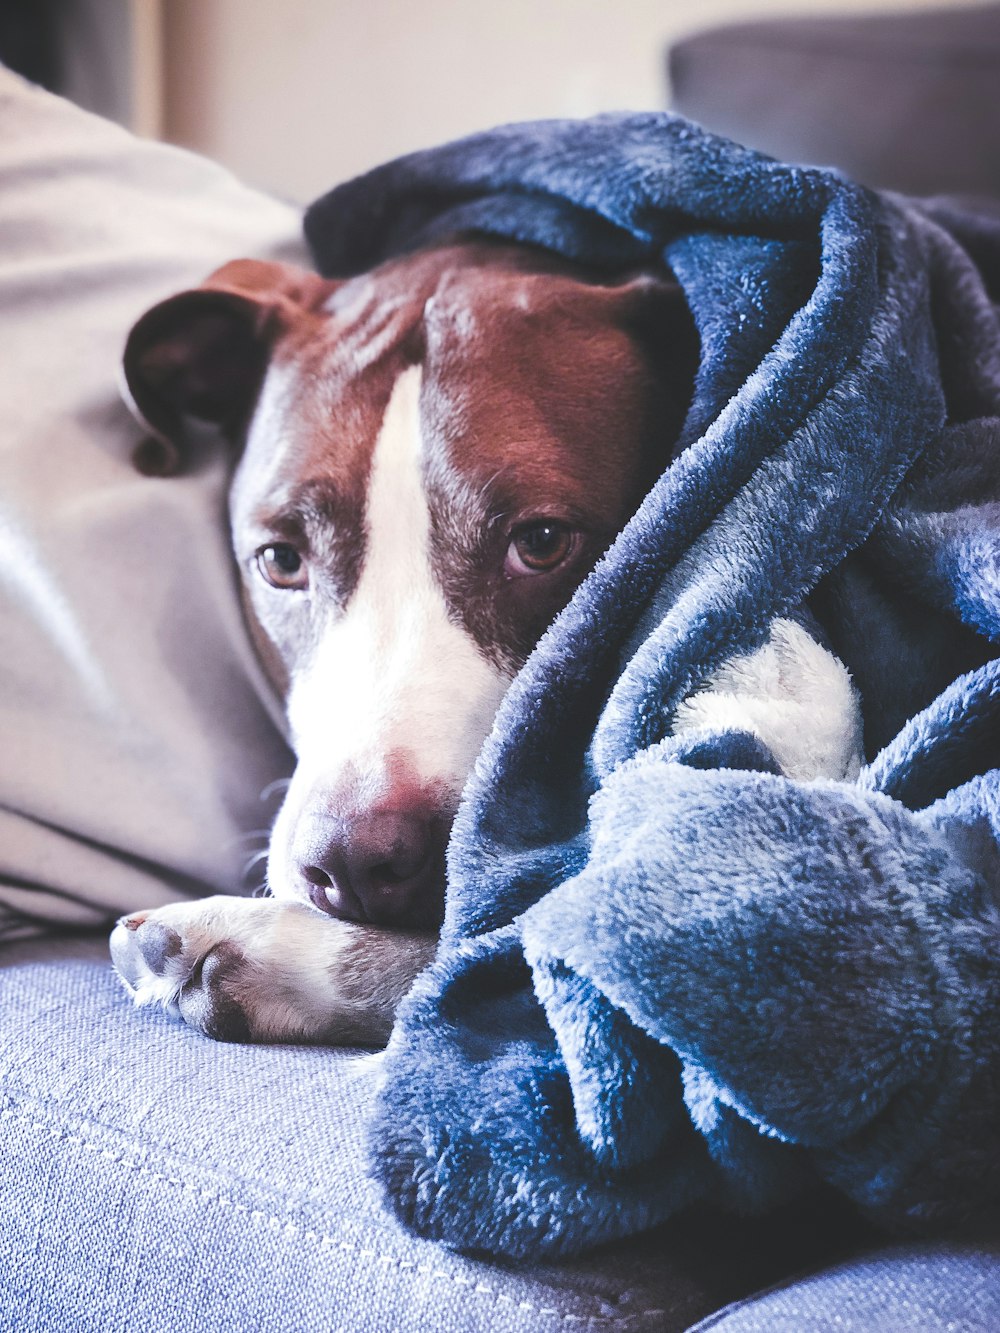 Dog In Blanket Pictures Download Free Images On Unsplash